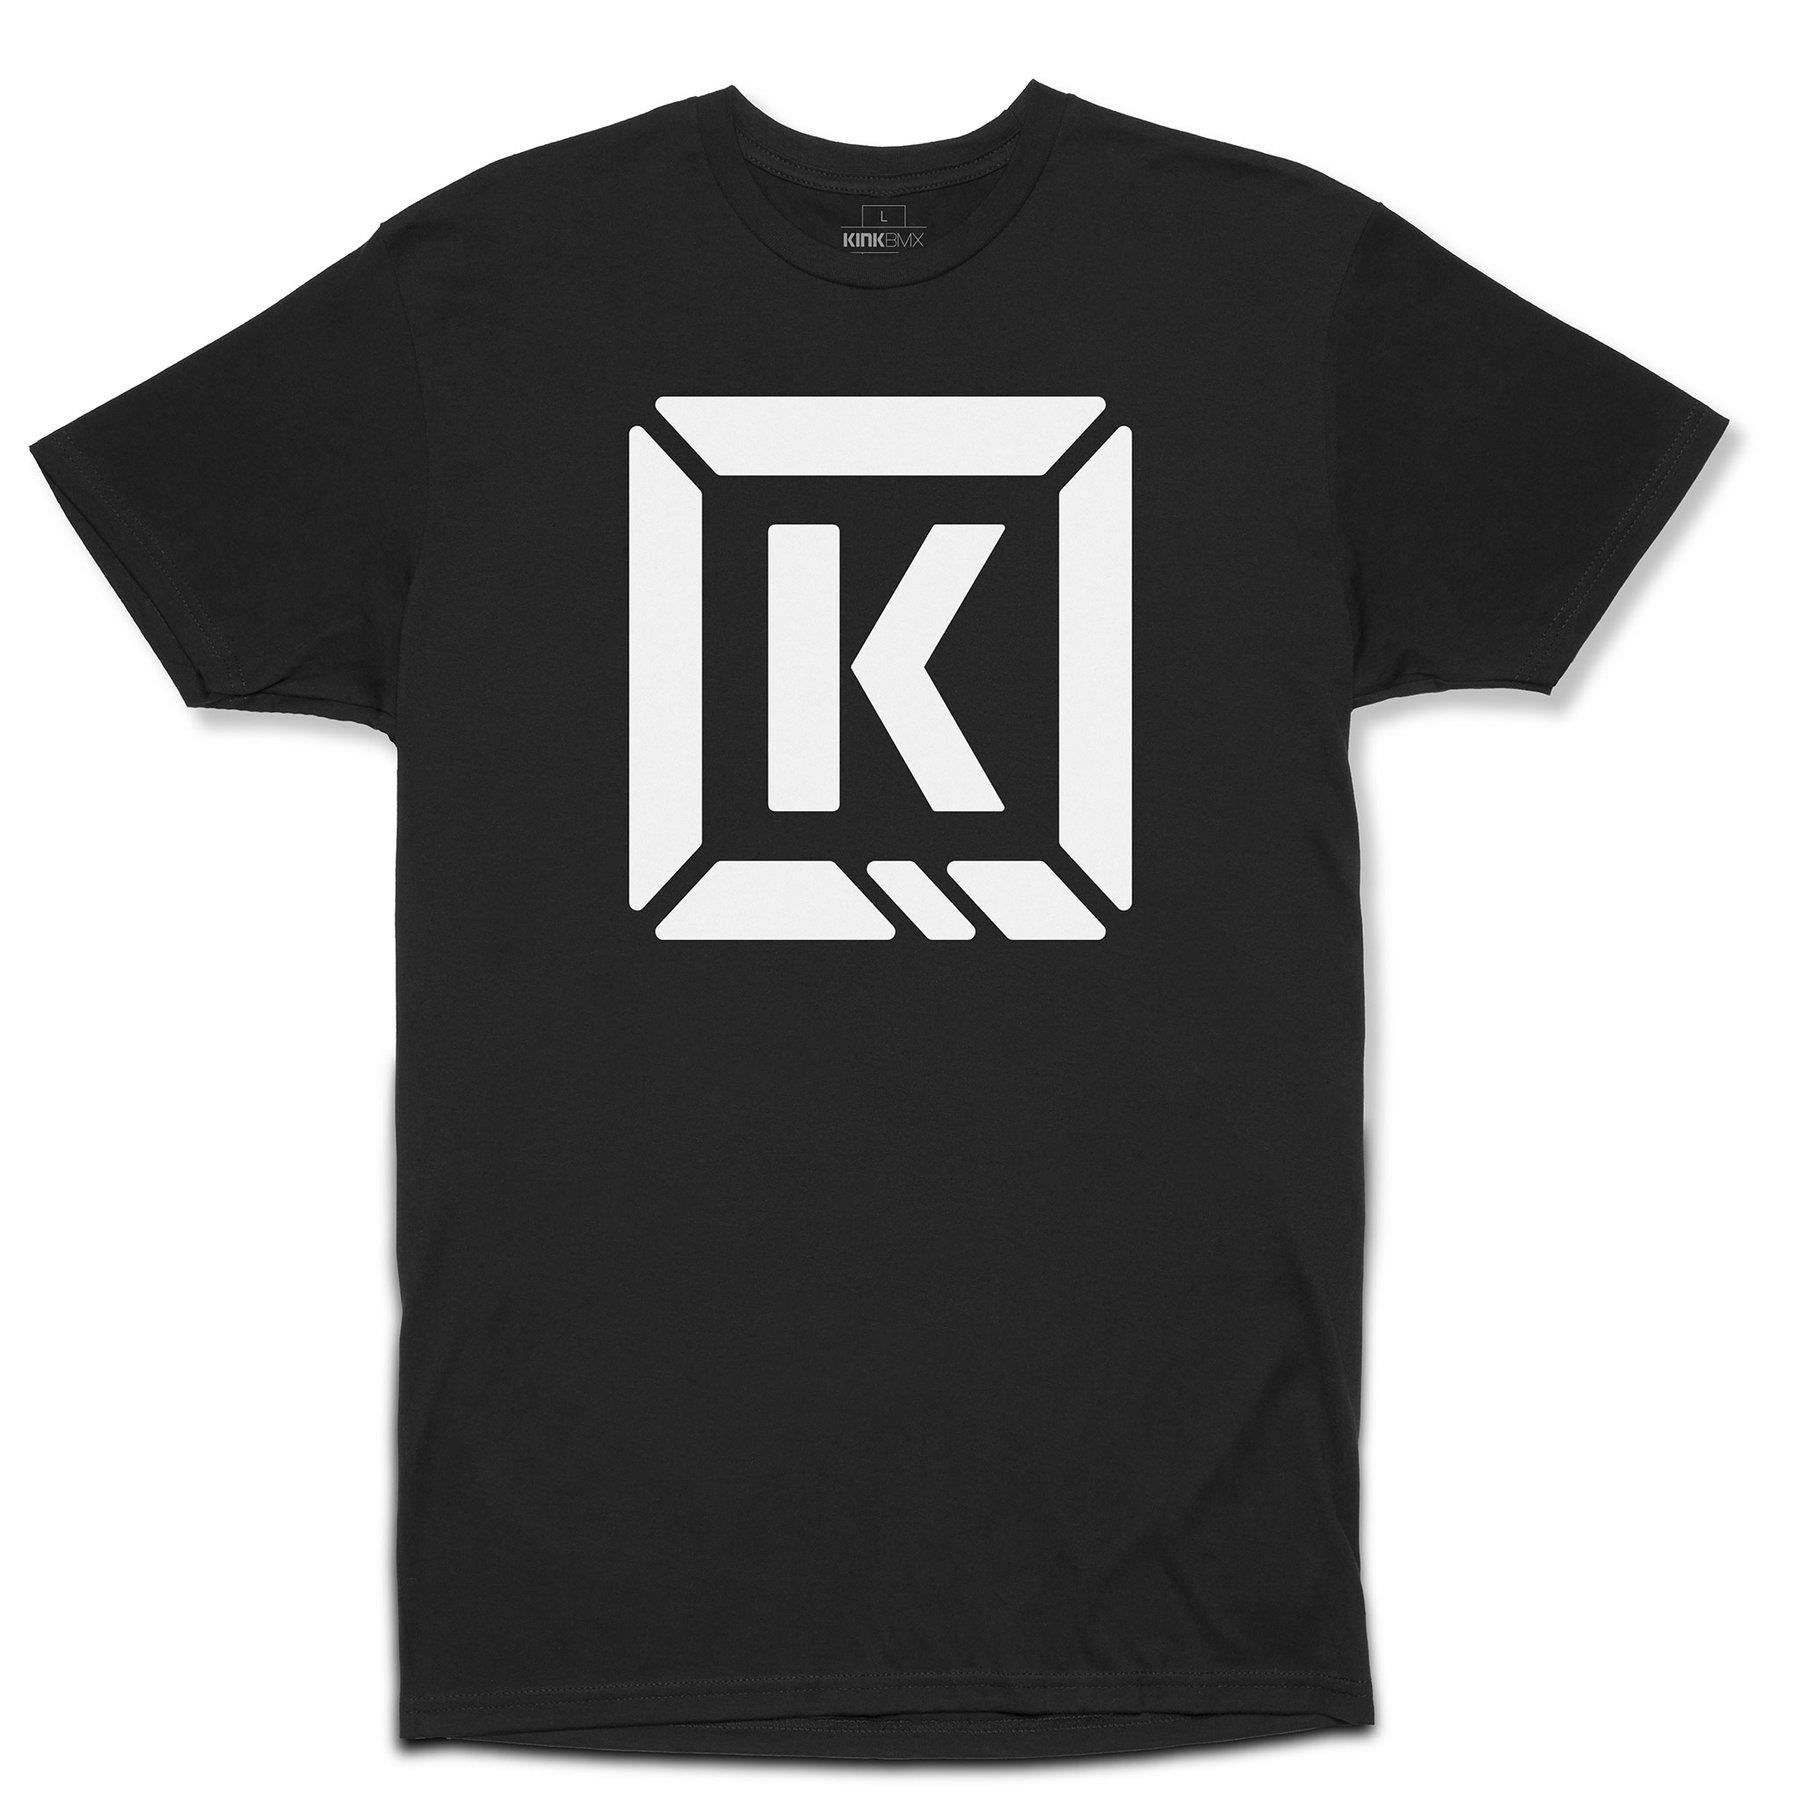 Kink Represent T-Shirt - Black Small